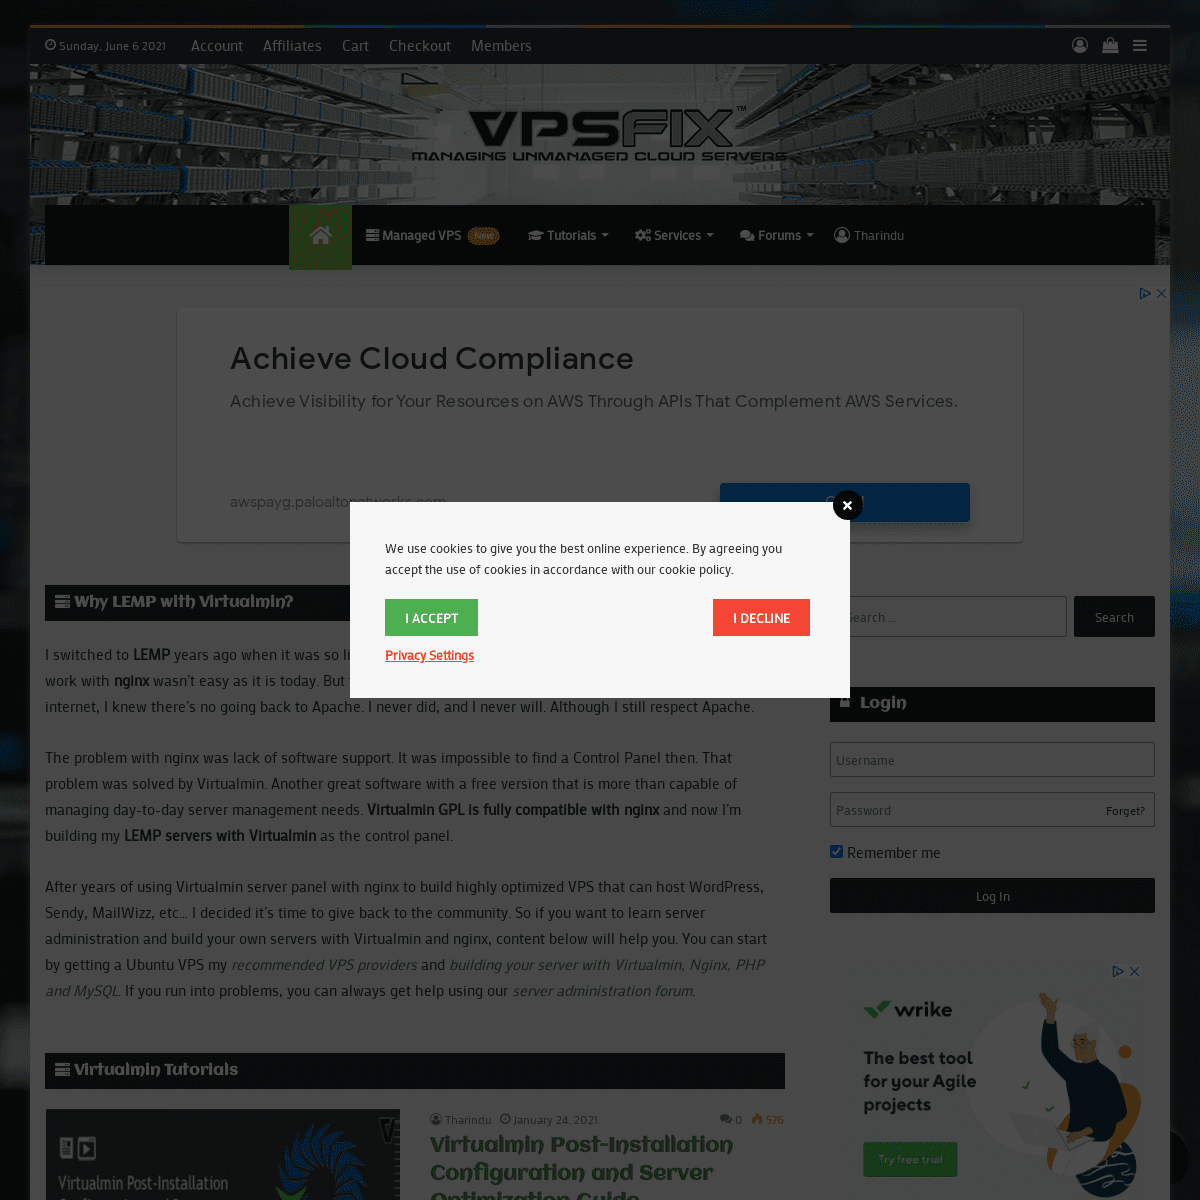 A complete backup of https://vpsfix.com